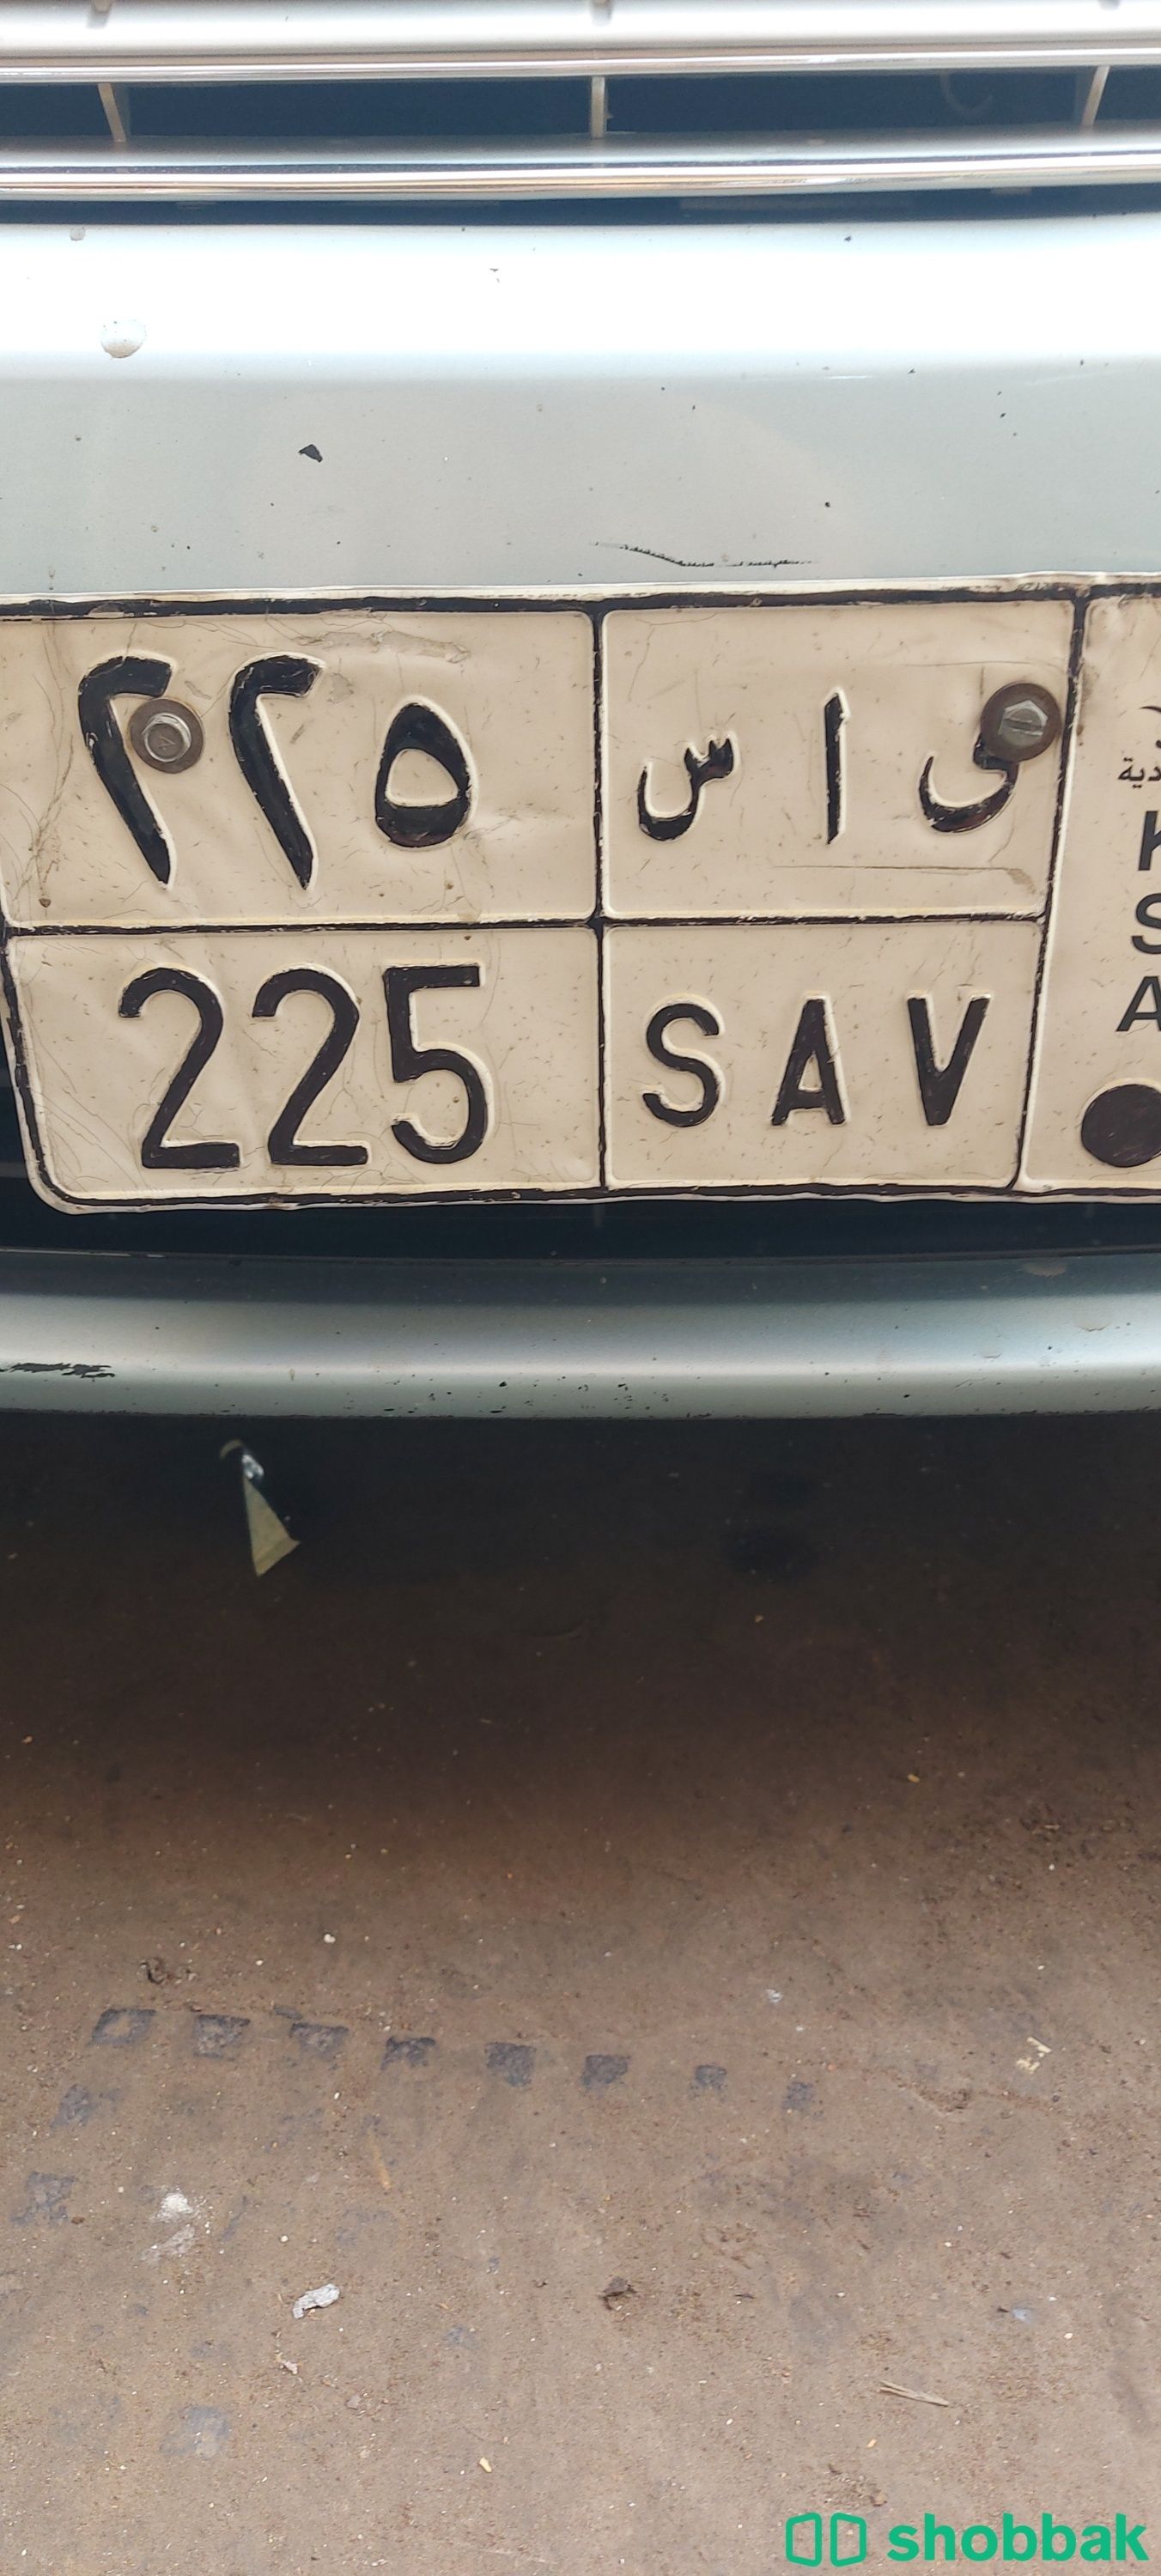 Number plate  Shobbak Saudi Arabia